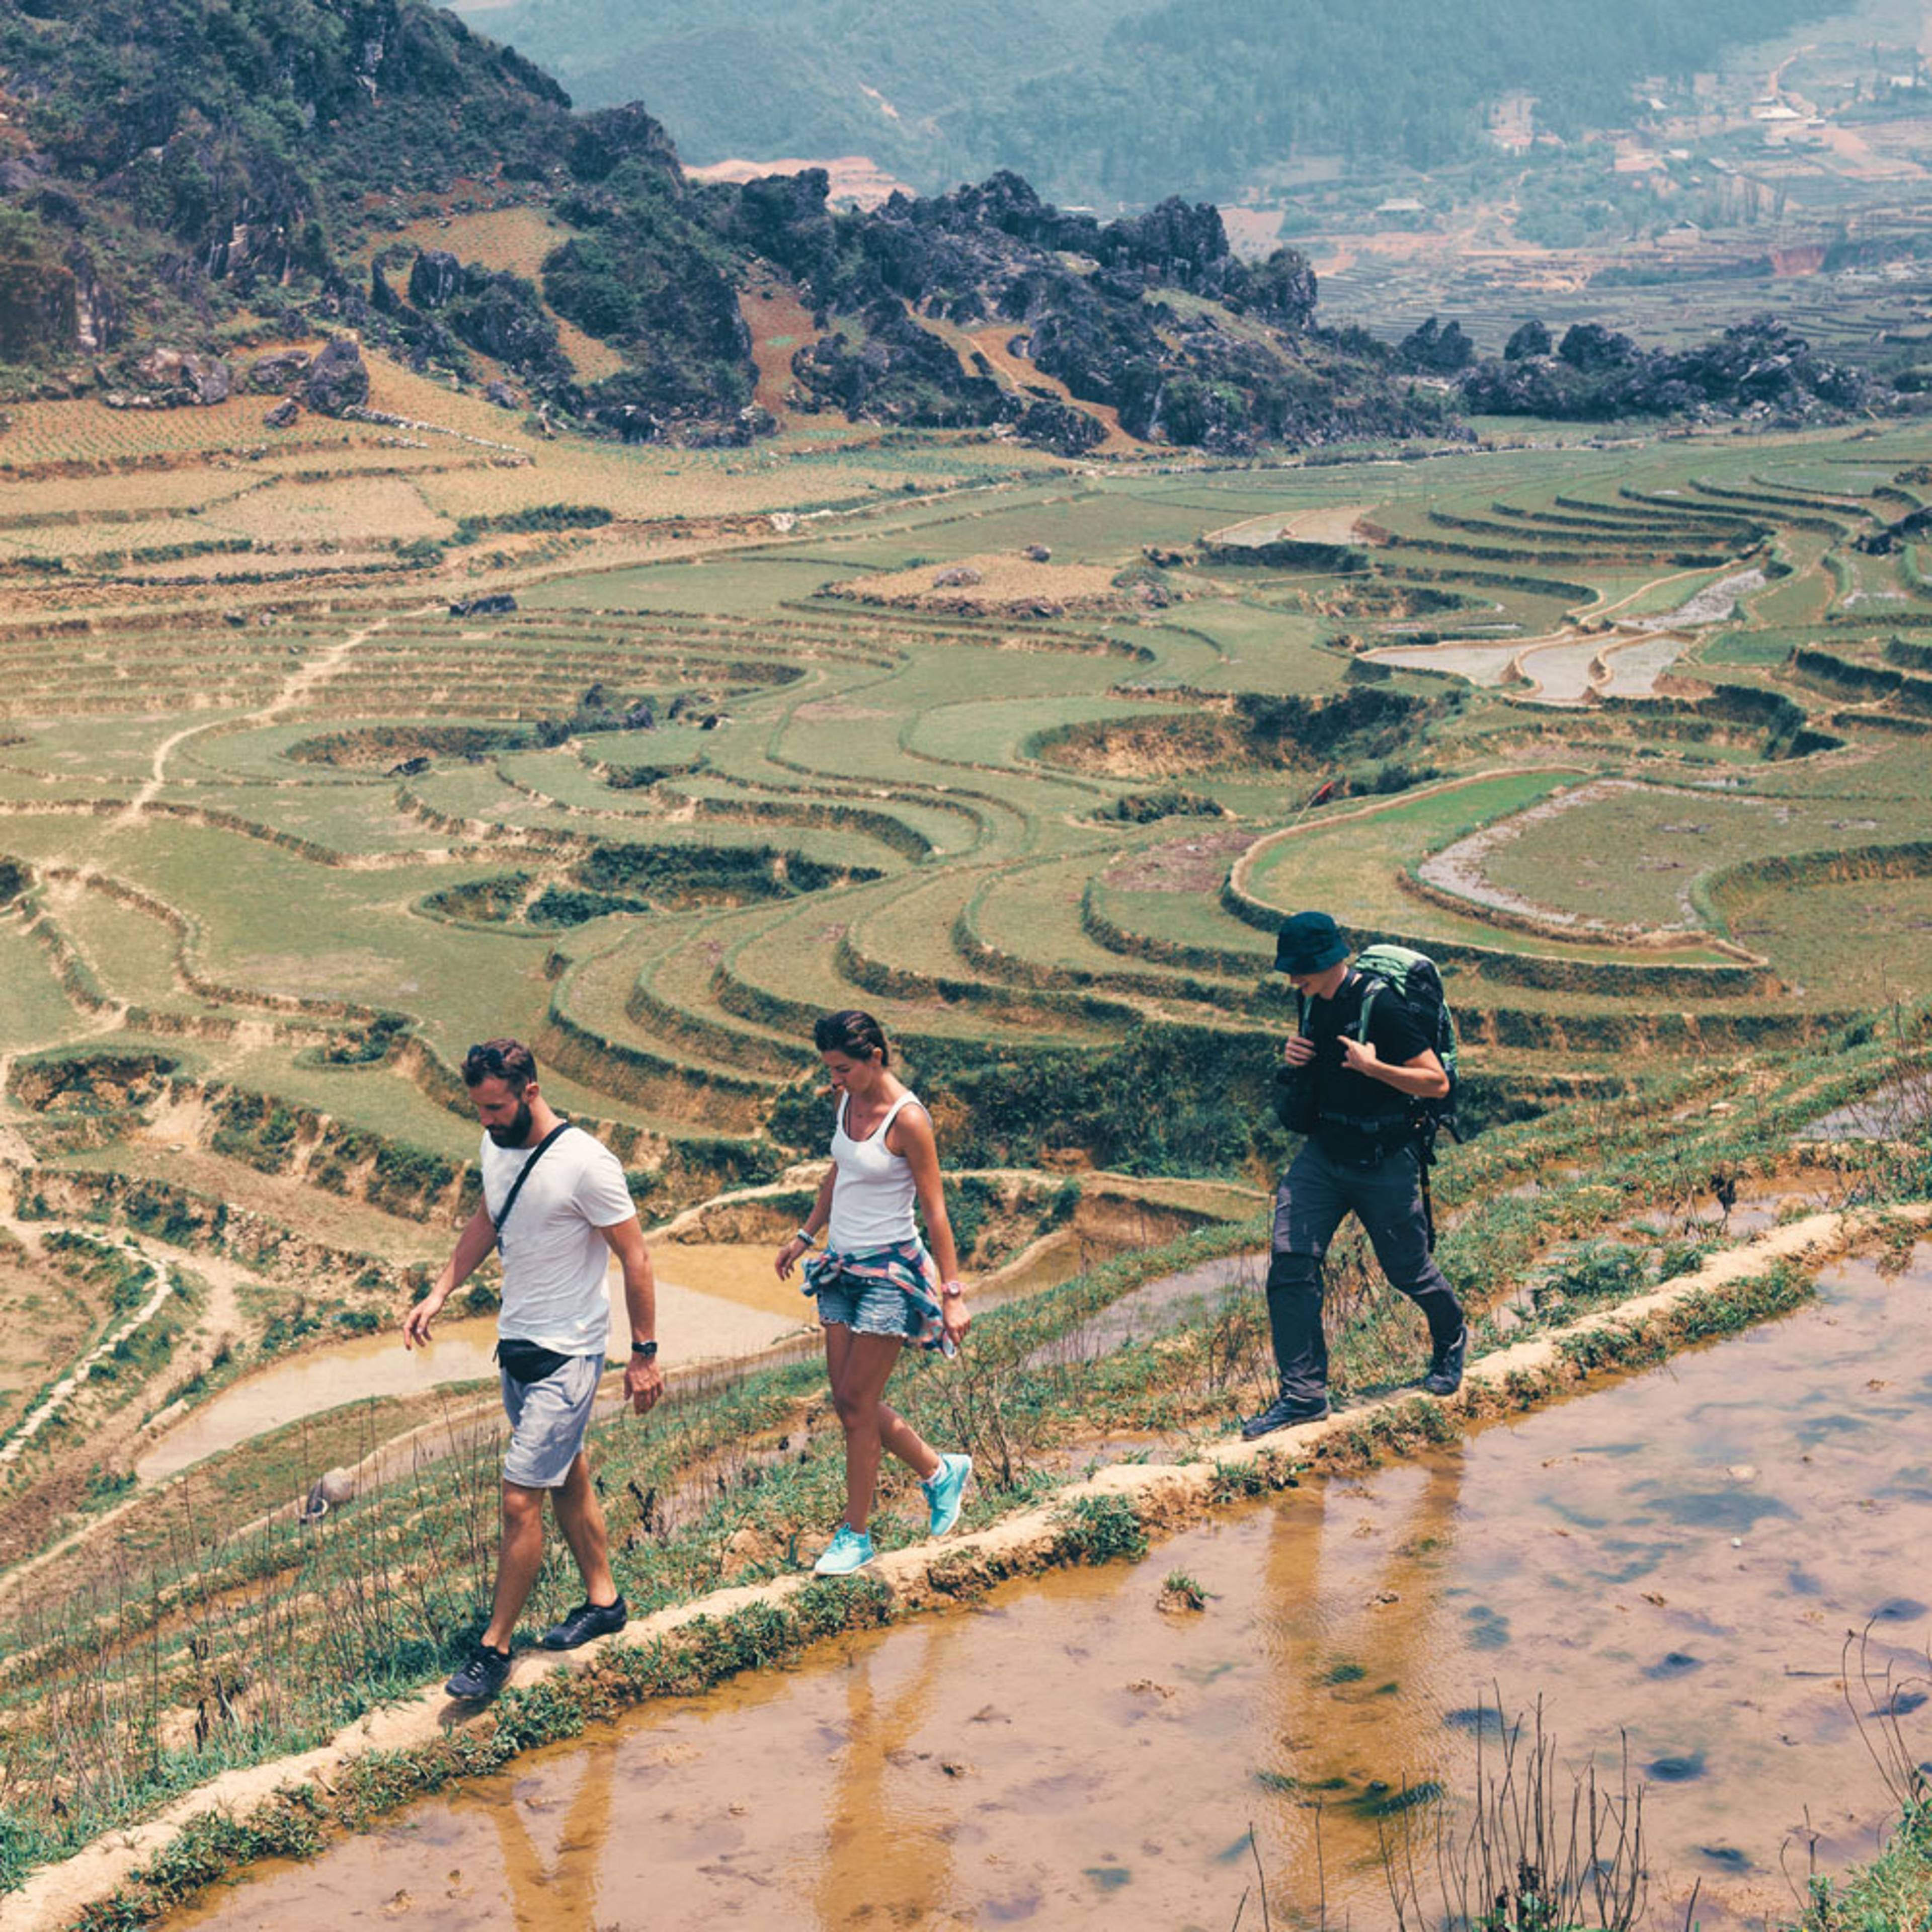 Trekking ed escursioni in Vietnam 100% su misura